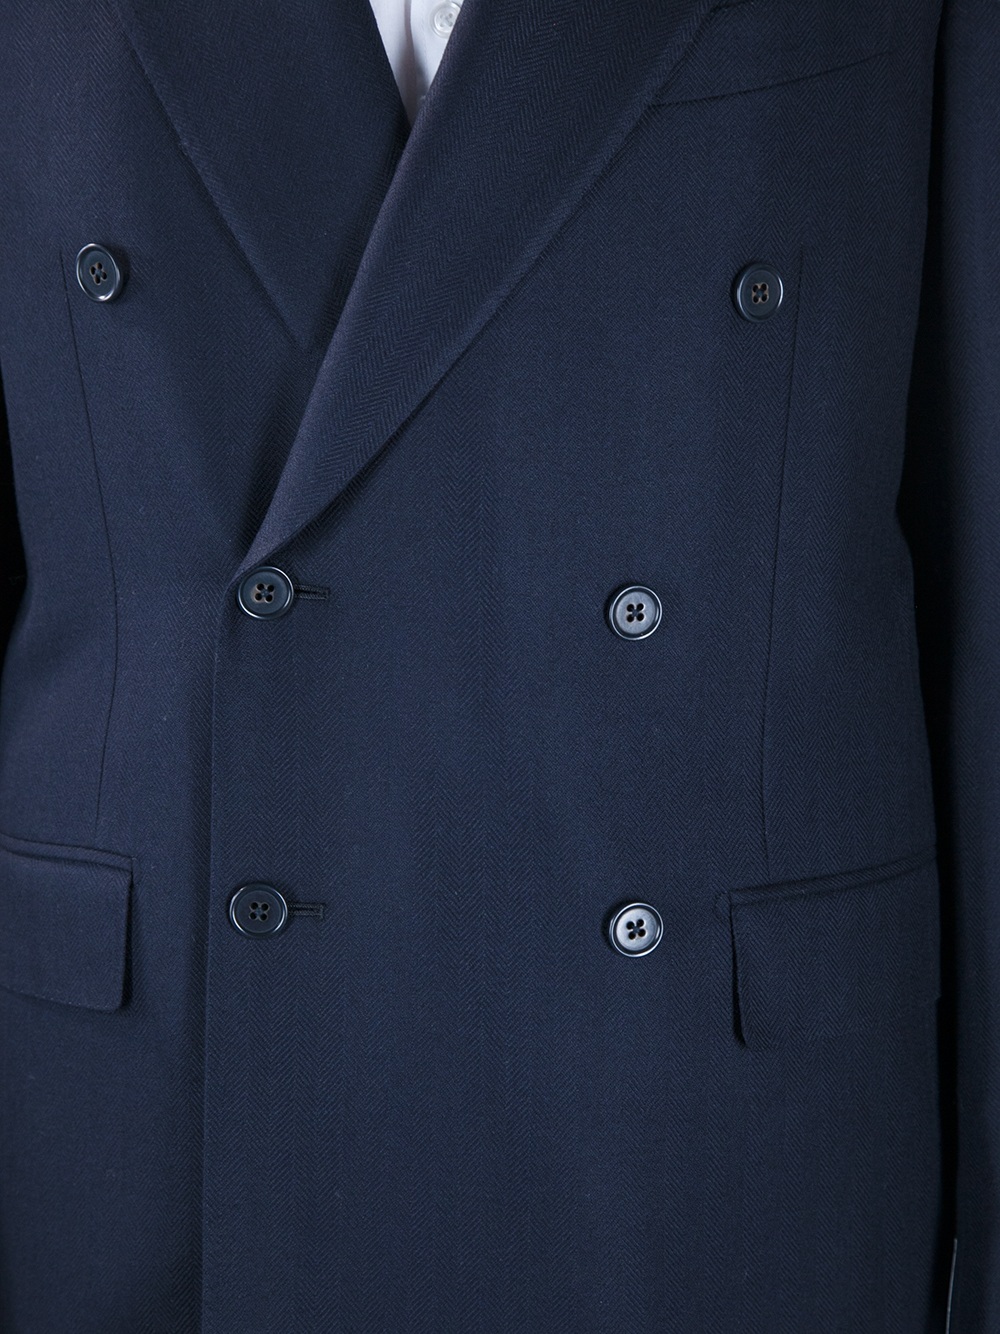 Ermenegildo Zegna Double Breasted Suit in Blue for Men - Lyst